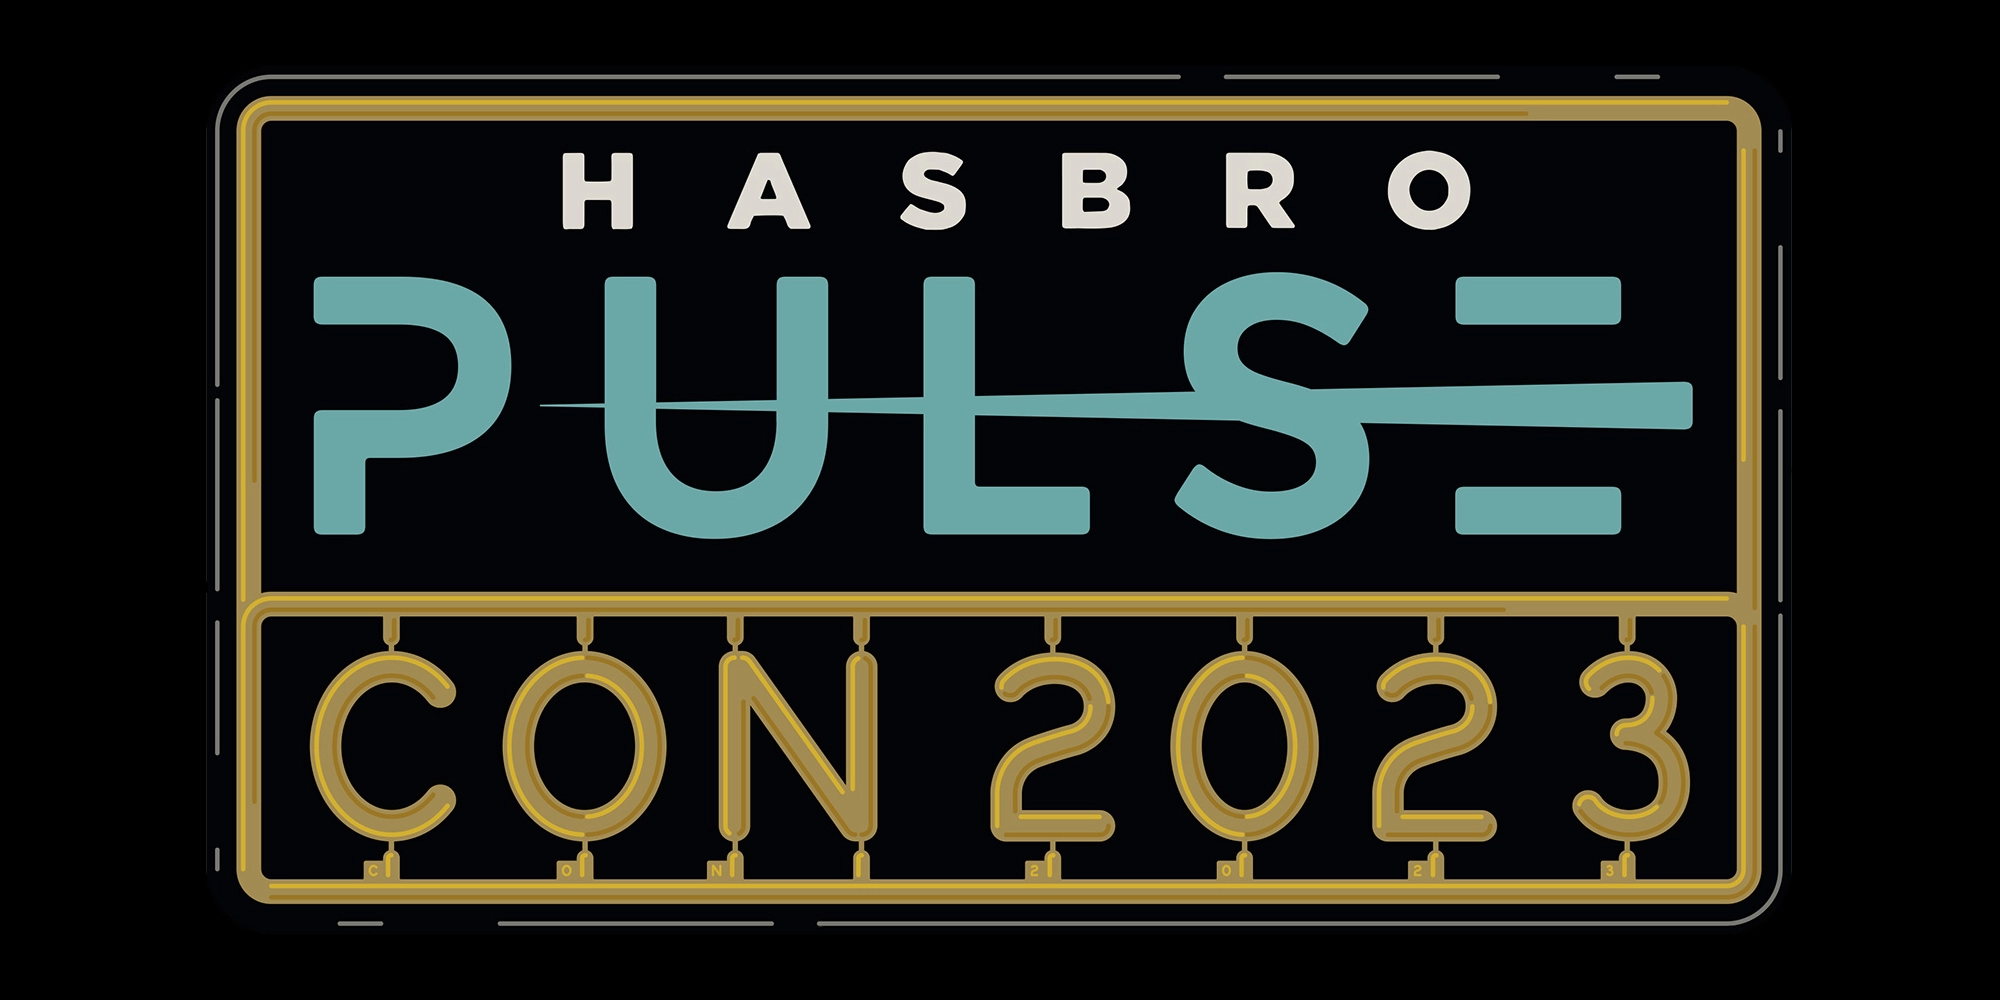 Hasbro Pulse Con 2023 Details Announced